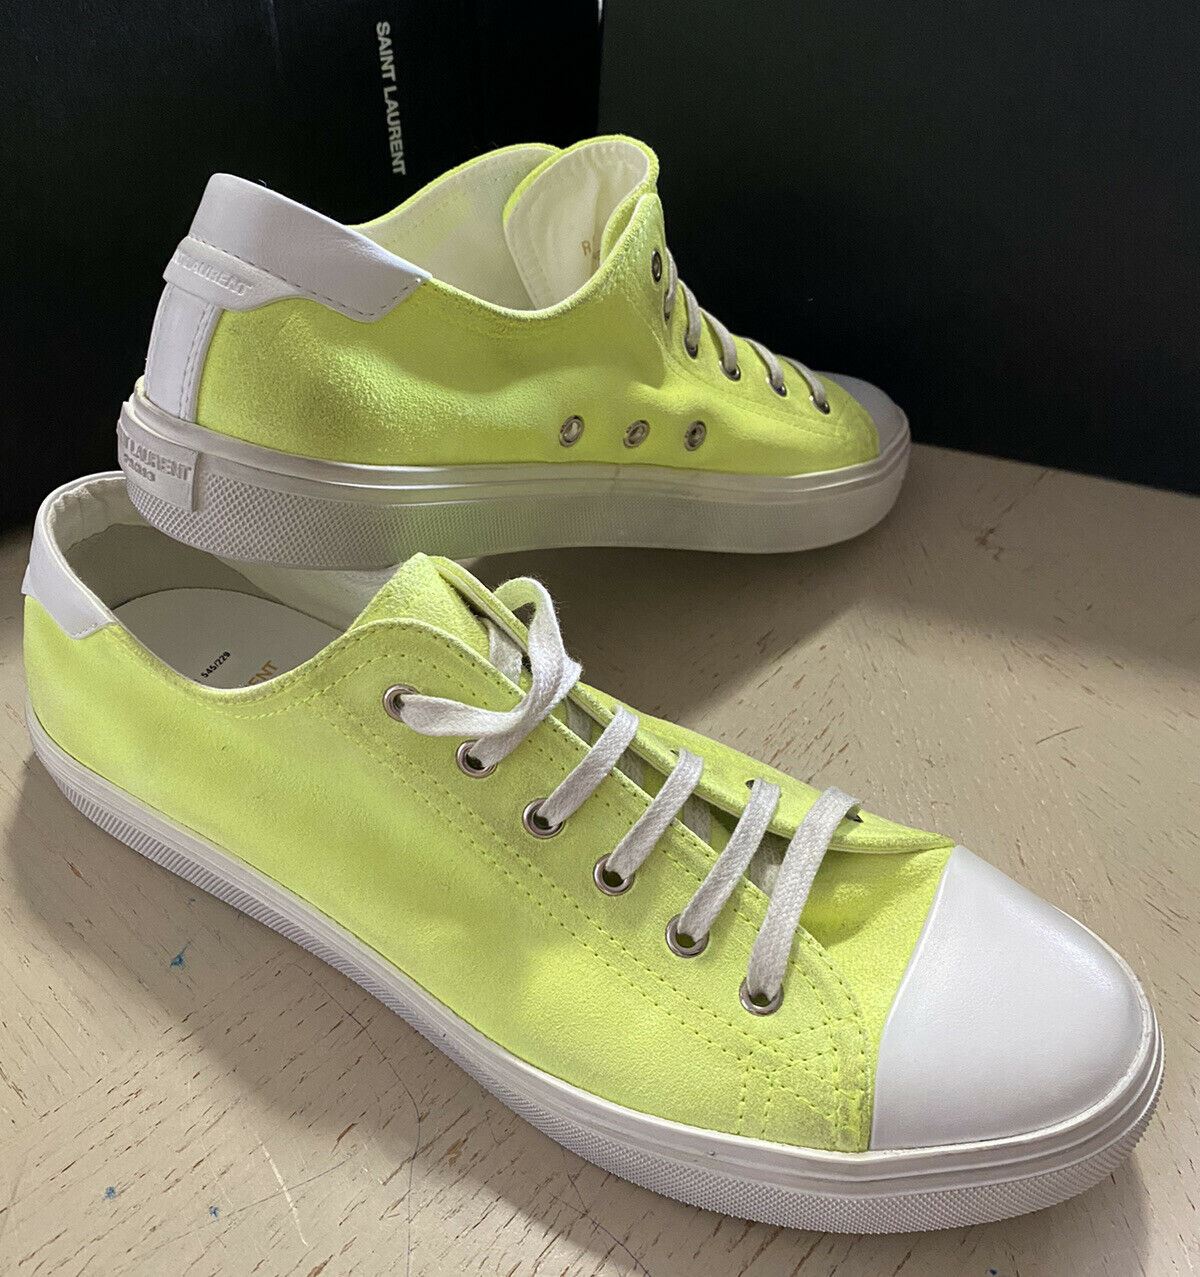 NIB Saint Laurent Men’s Suede Sneakers Shoes Yellow/White 10.5 US/43.5 Eu Italy